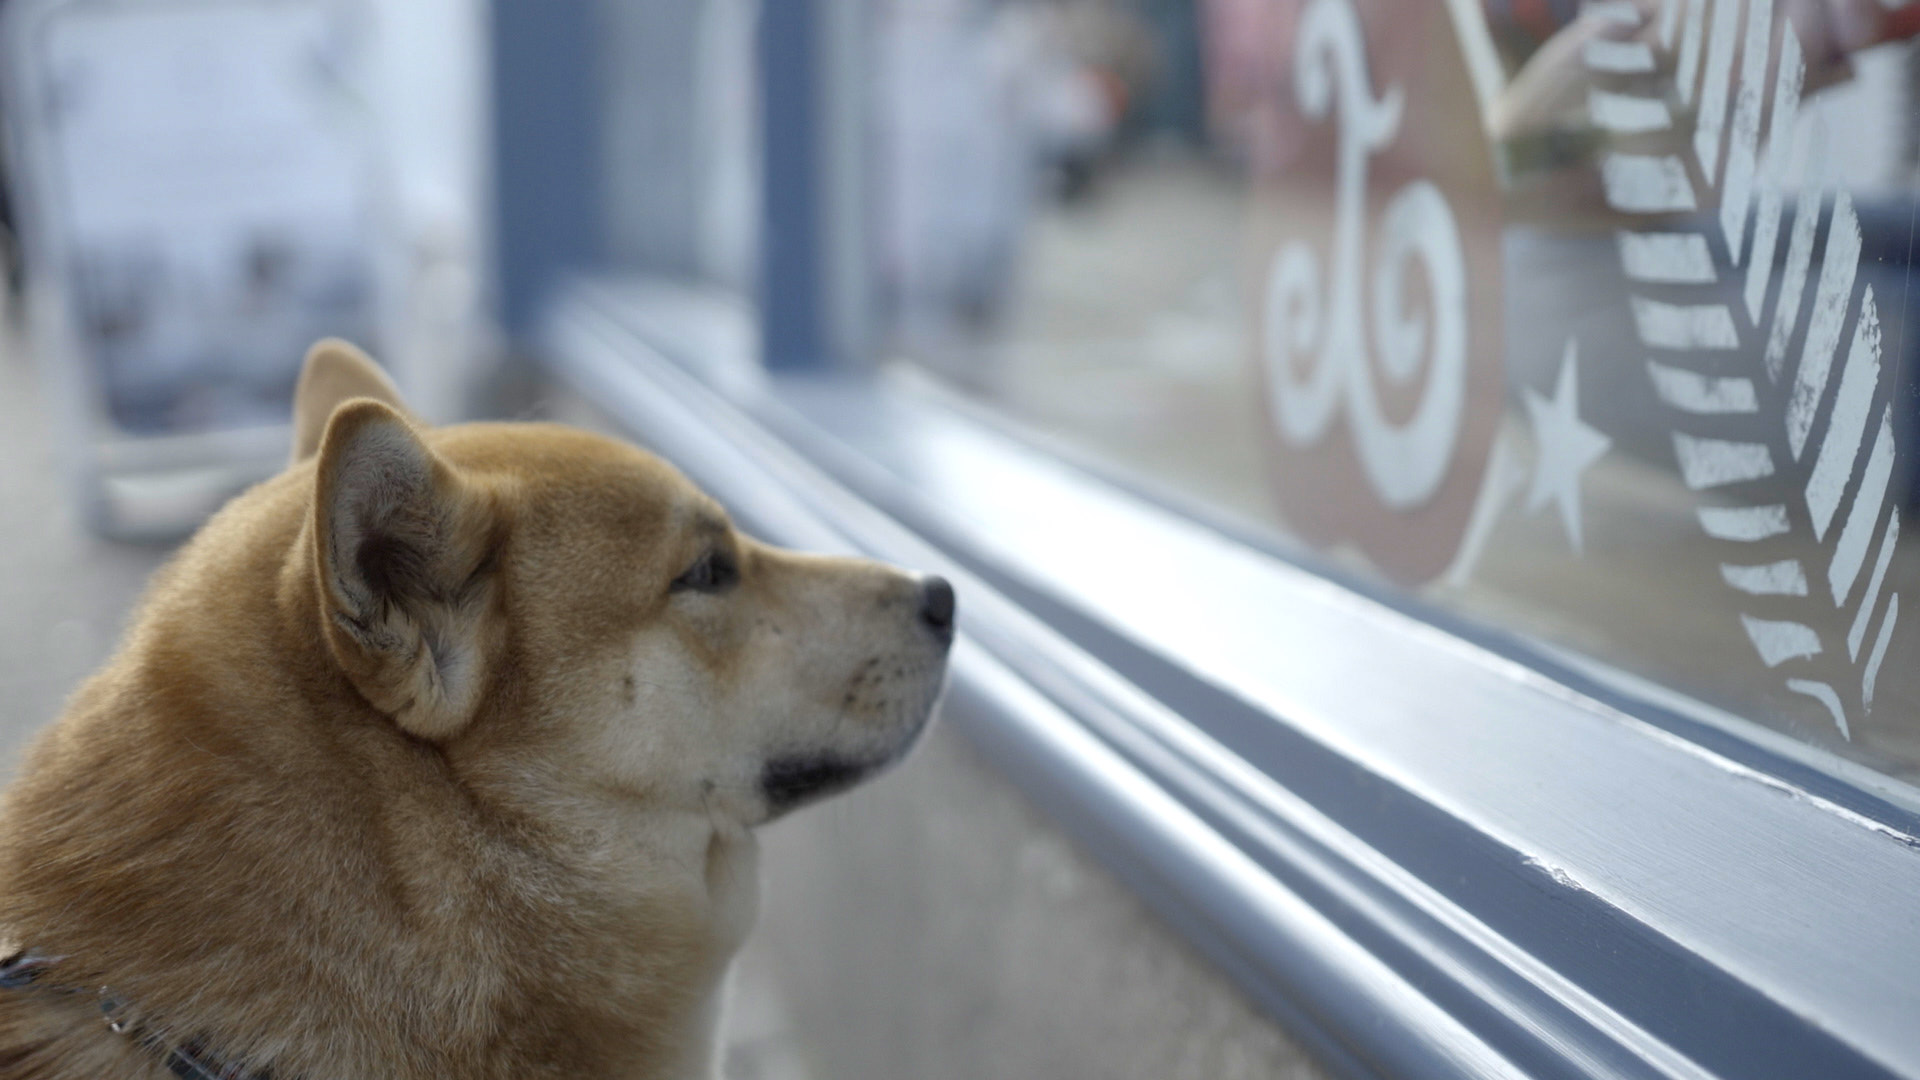 Yoshi the dog admires the Seasalt Christmas window displays